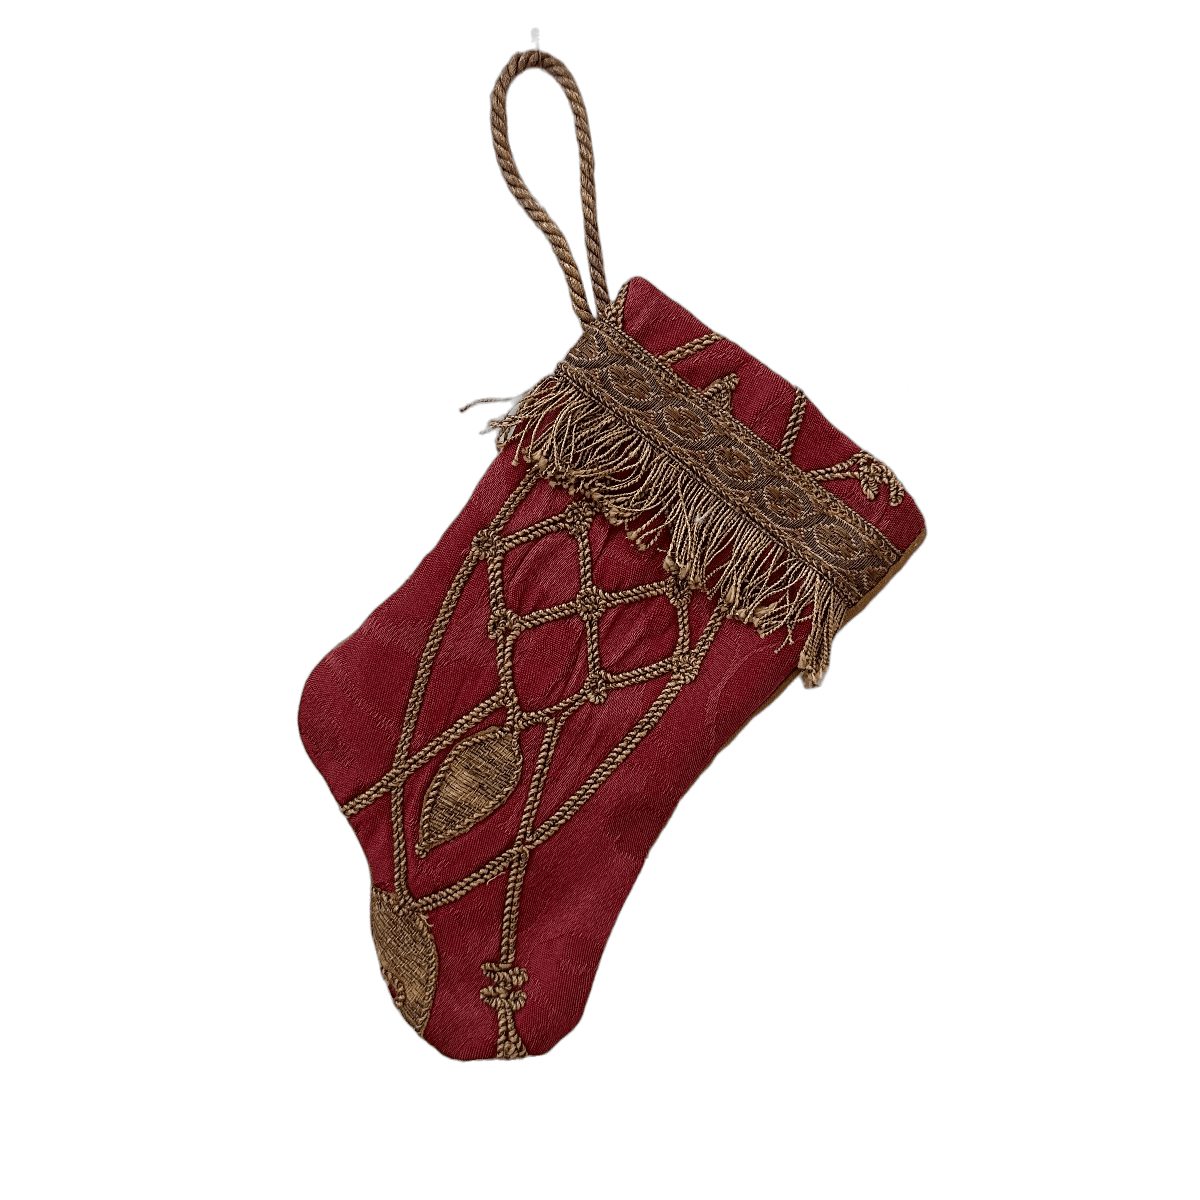 Handmade Mini Stocking Ornament from Antique & Vintage Textiles, Trims Ornament B. Viz Design B 